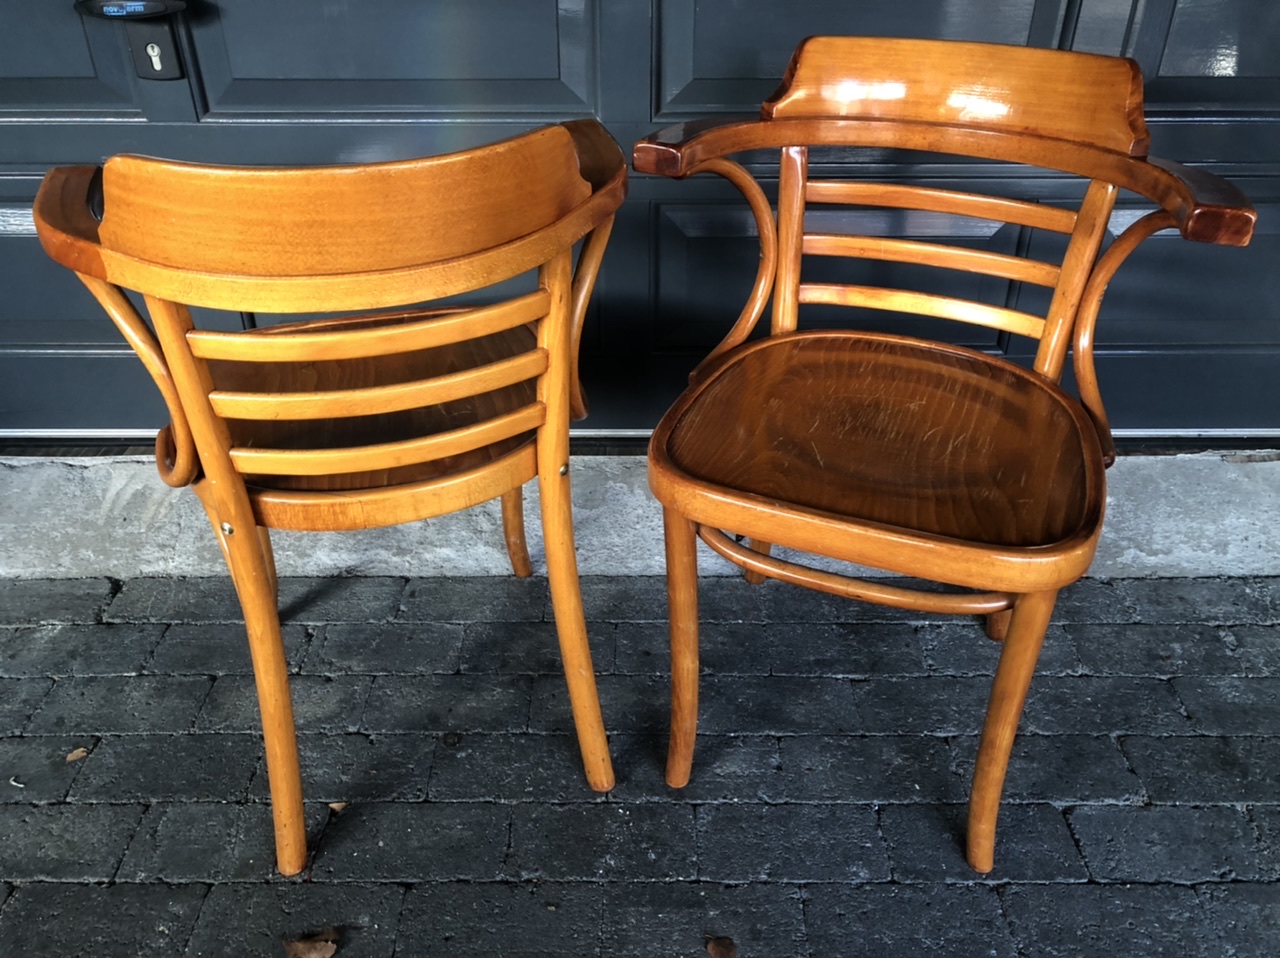 De parel horeca meubilair apeldoorn kantine stoelen mancave kroeg bar pun restaurant horeca stoelen stolar chairs chaise 